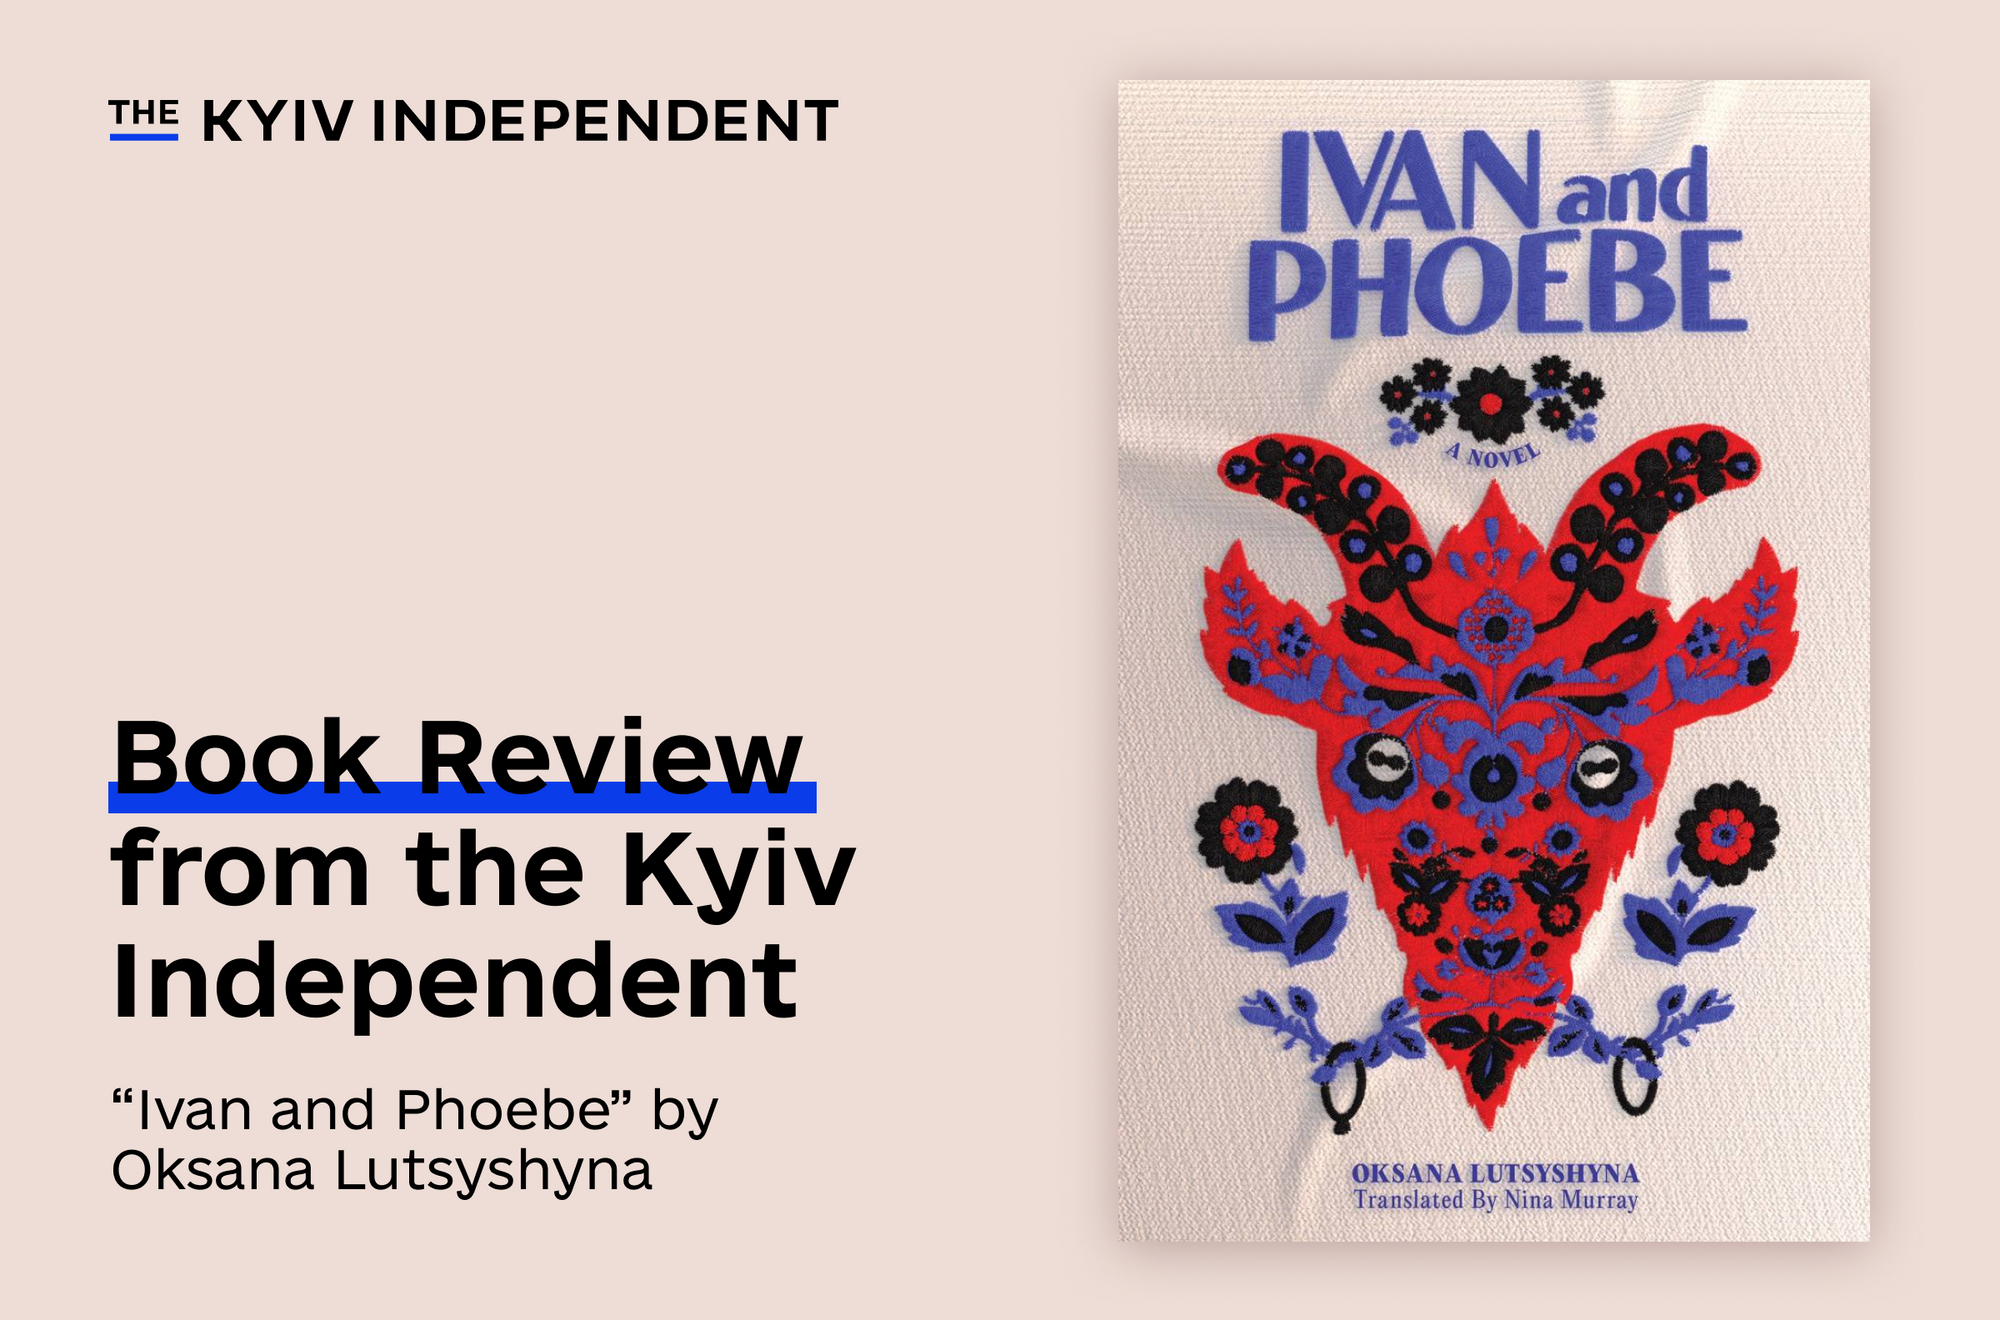 Revolution, patriarchy, woe: A review of Oksana Lutsyshyna’s ‘Ivan and Phoebe’